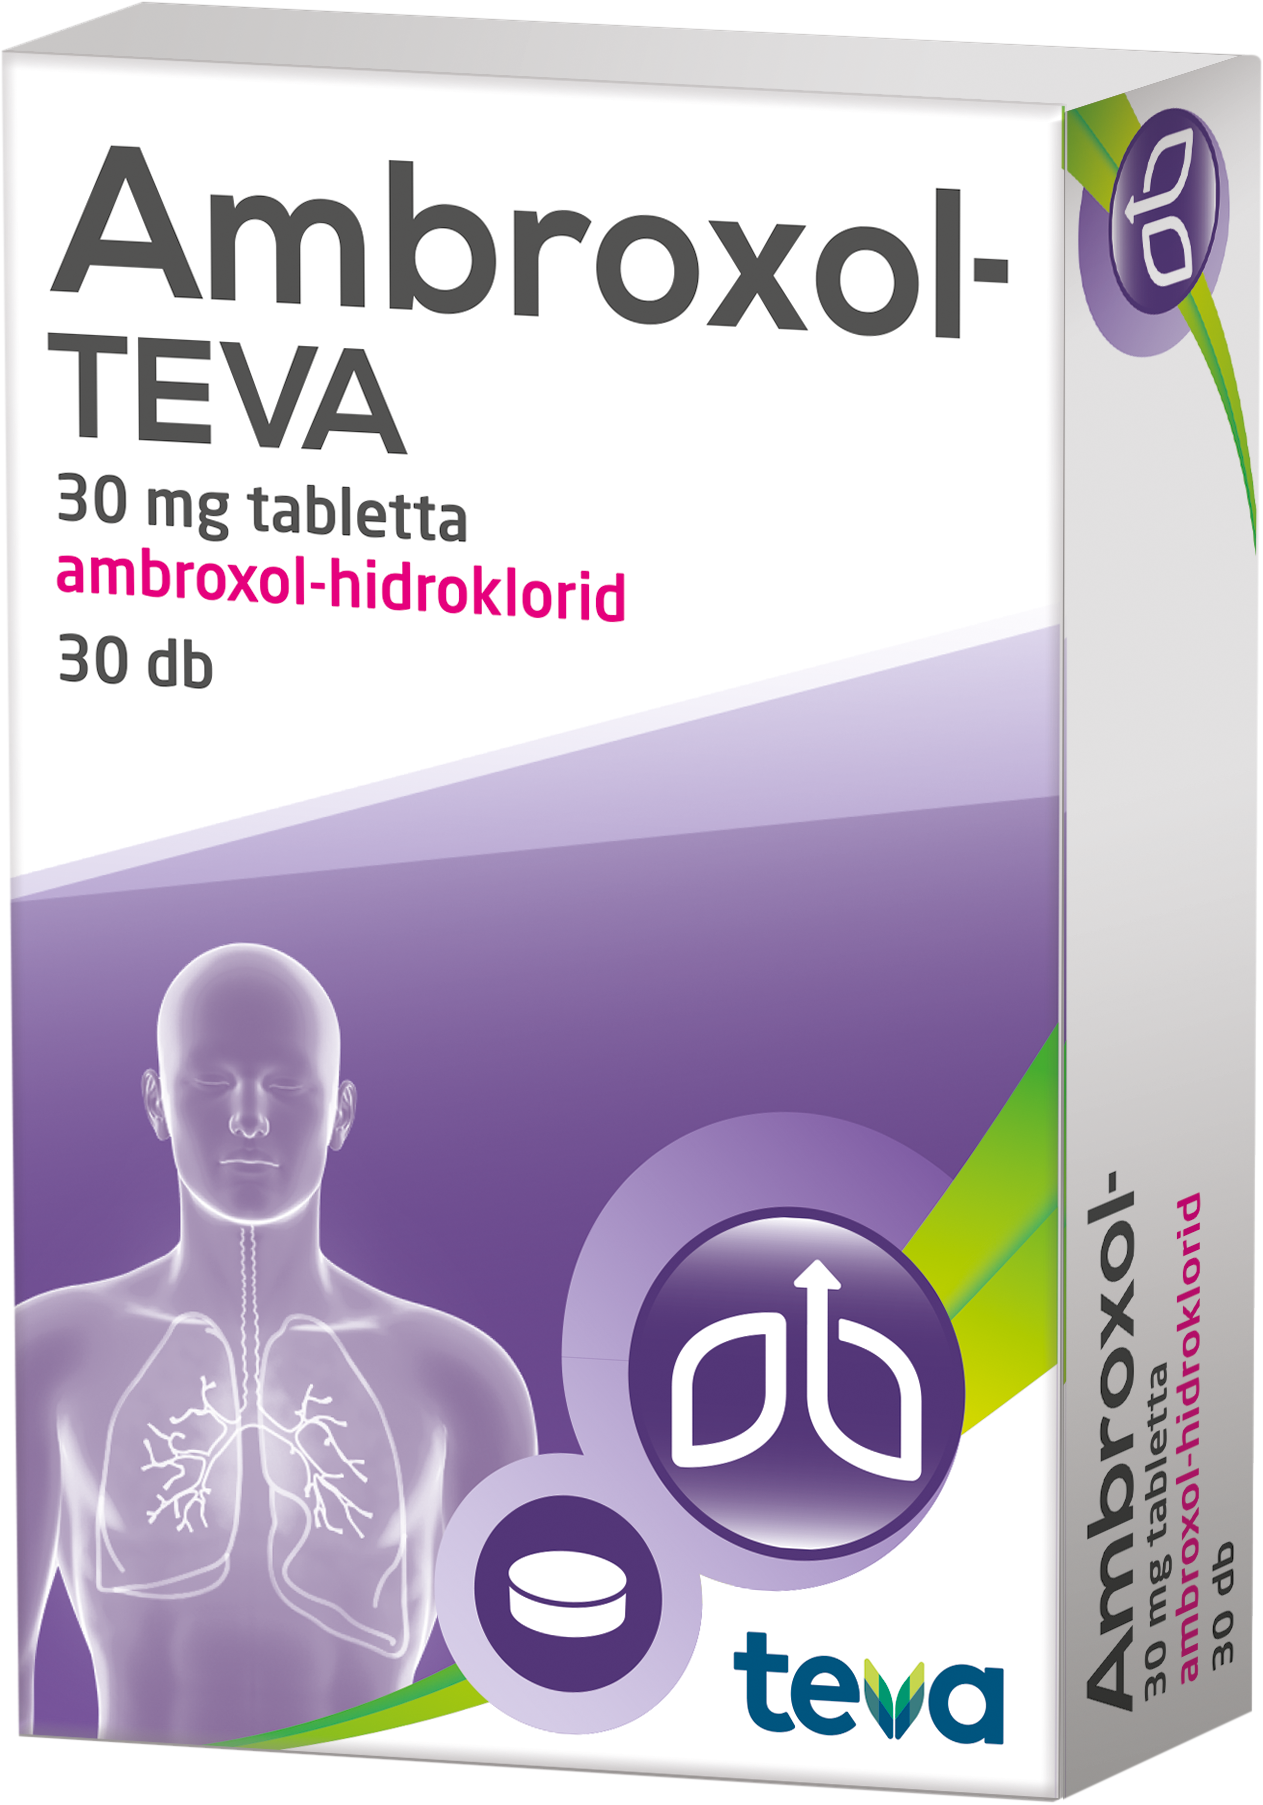 Ambroxol-Teva 30 mg tabletta 